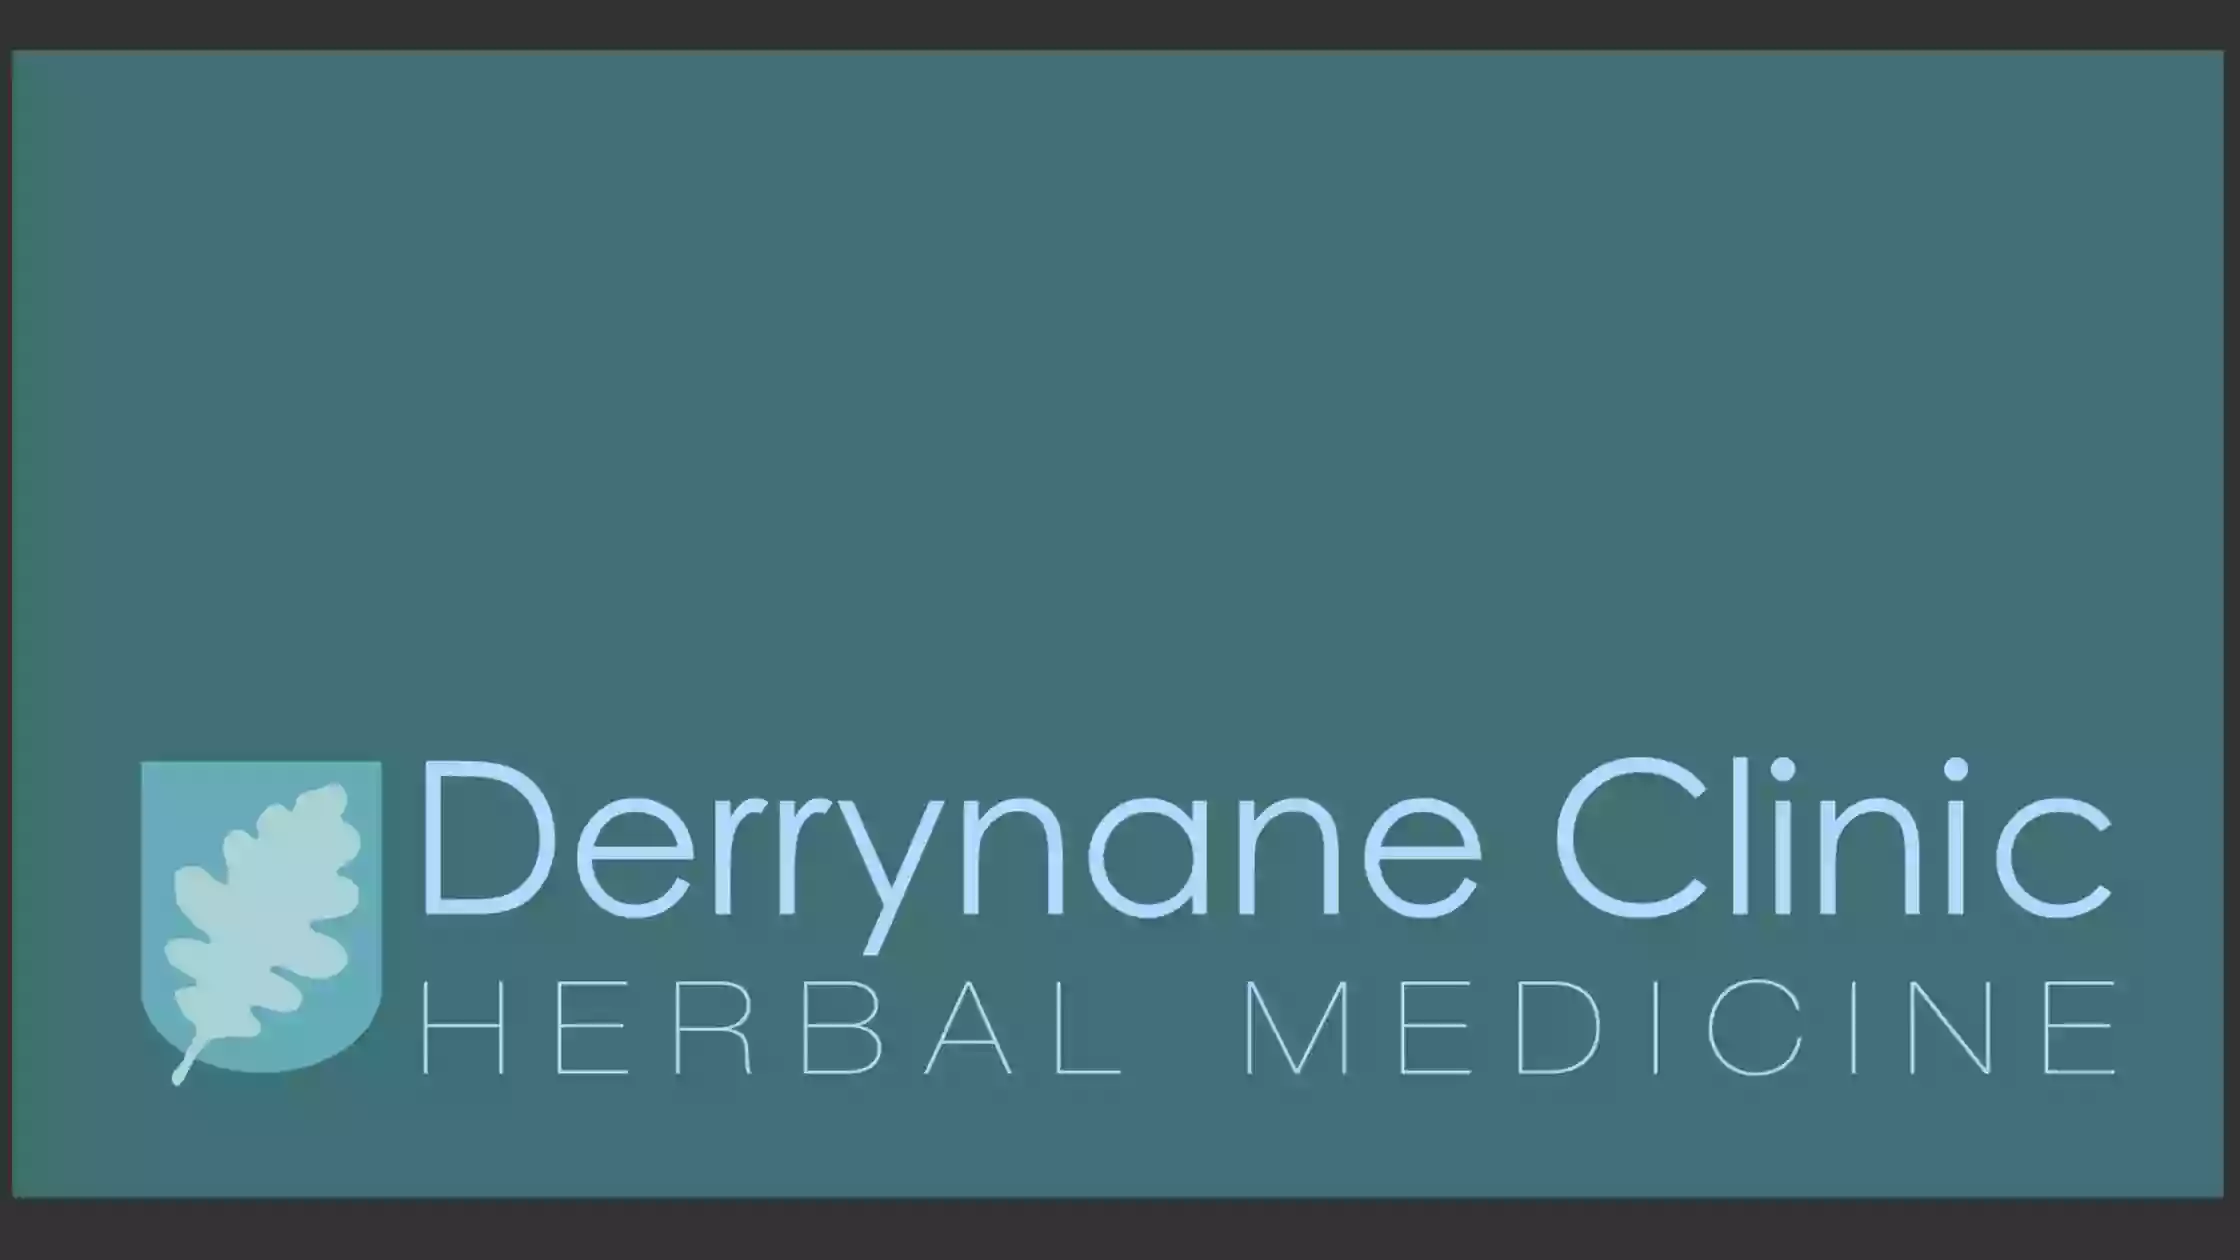 The Derrynane Clinic - Herbal Medicine